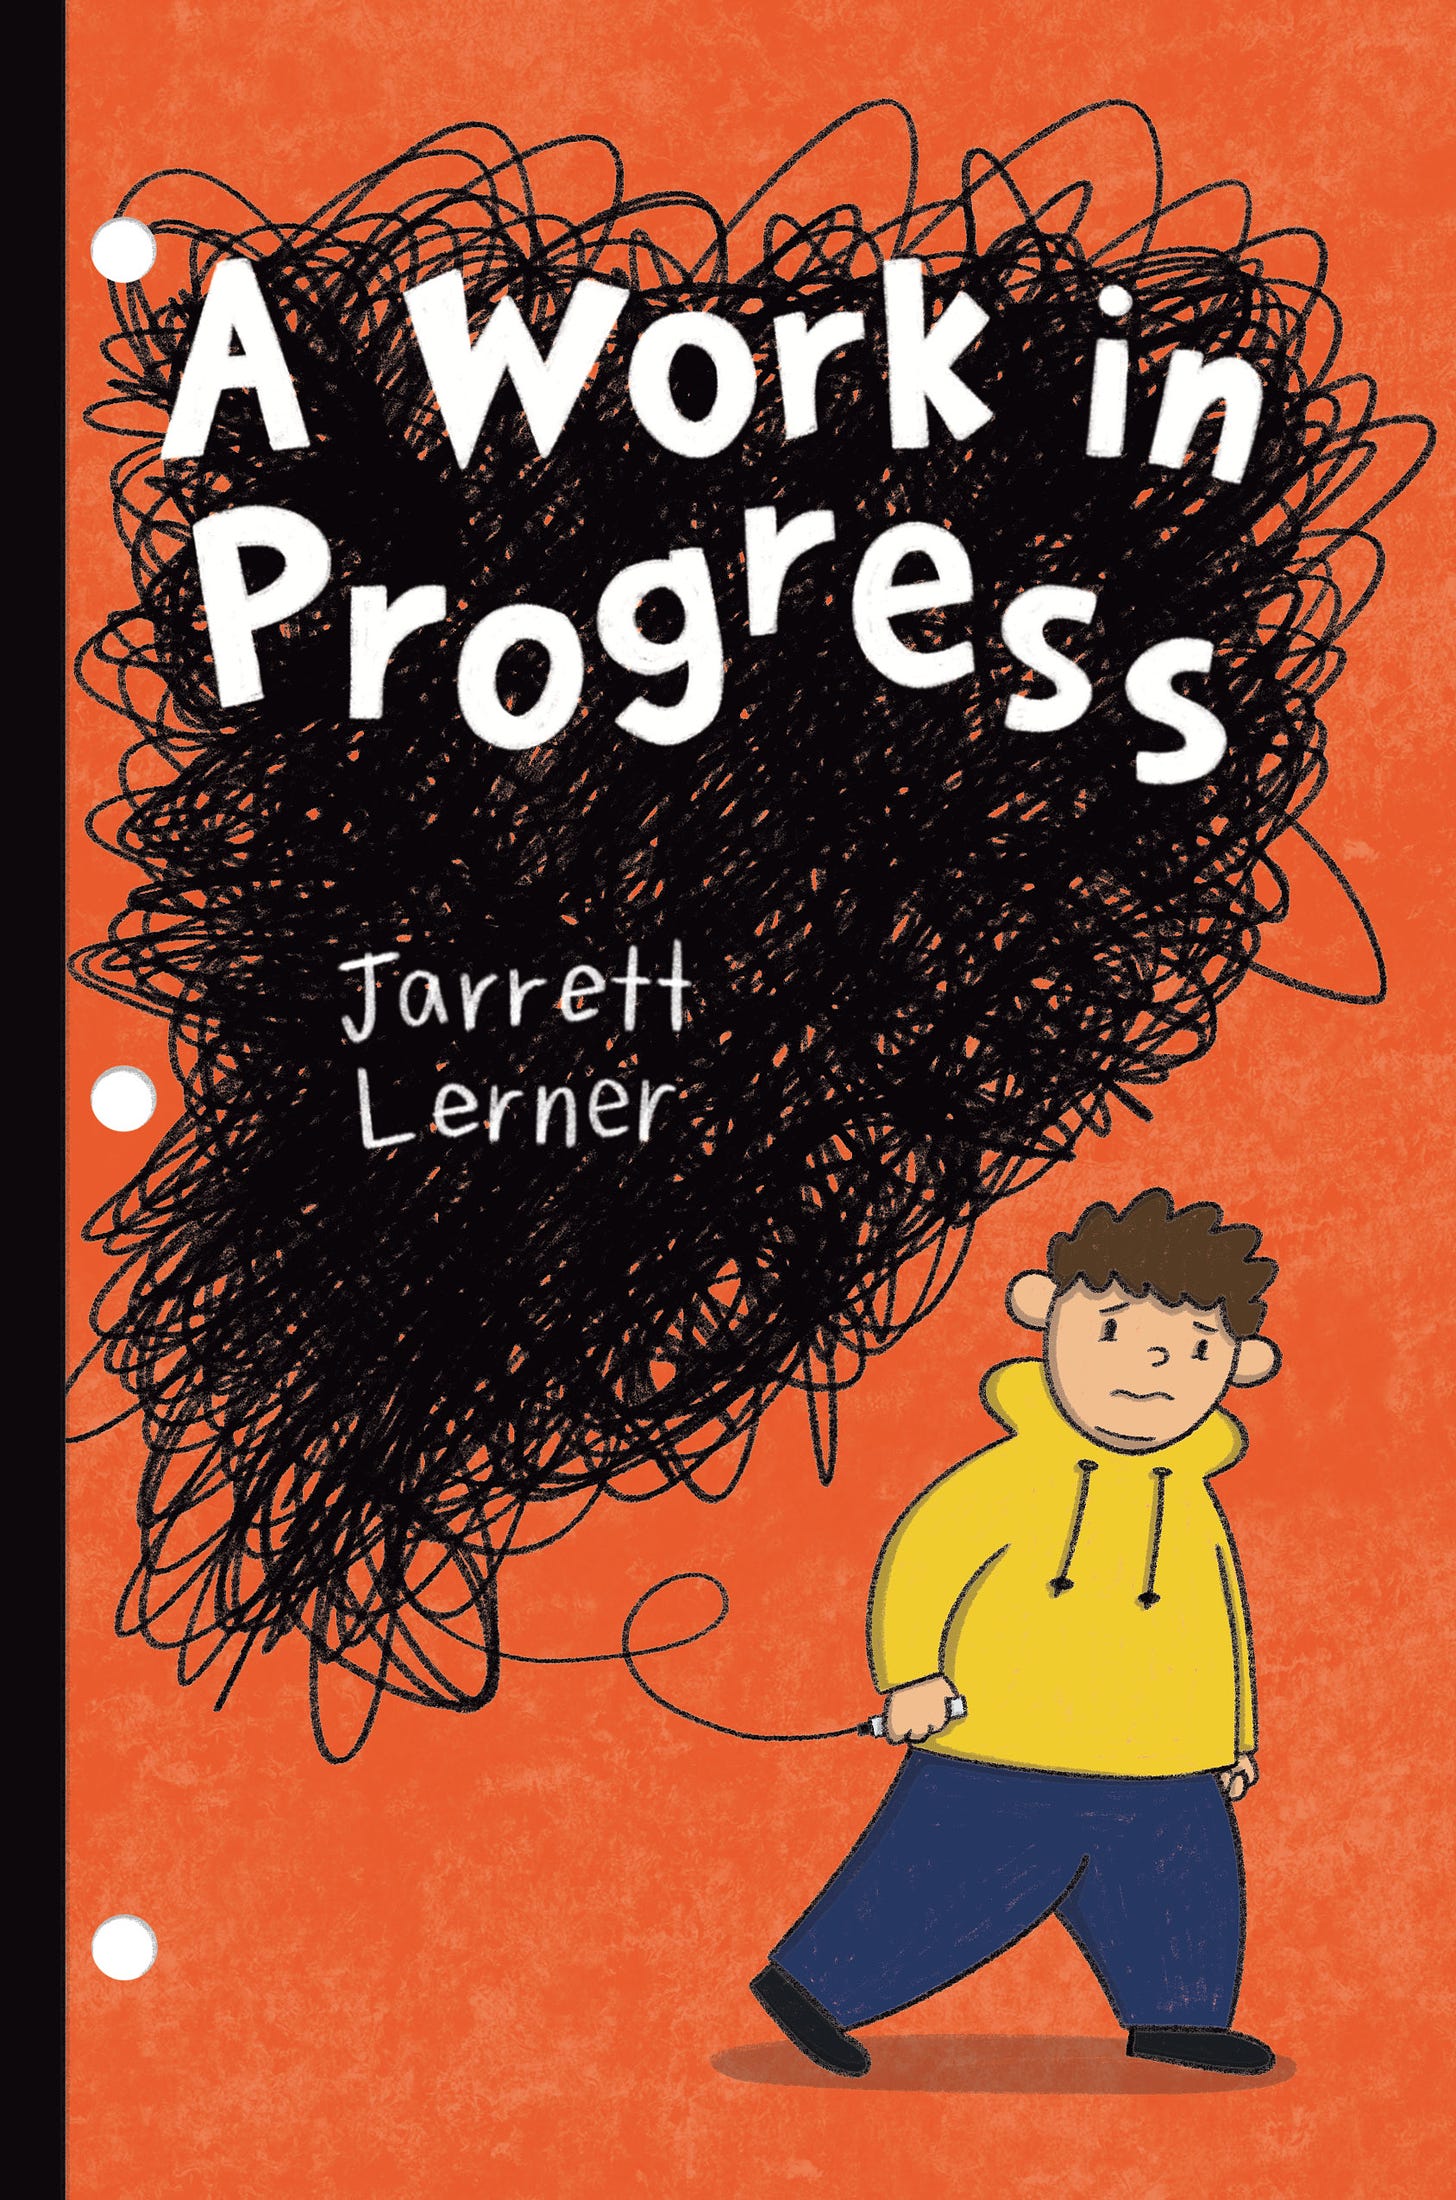 A WORK IN PROGRESS – Jarrett Lerner